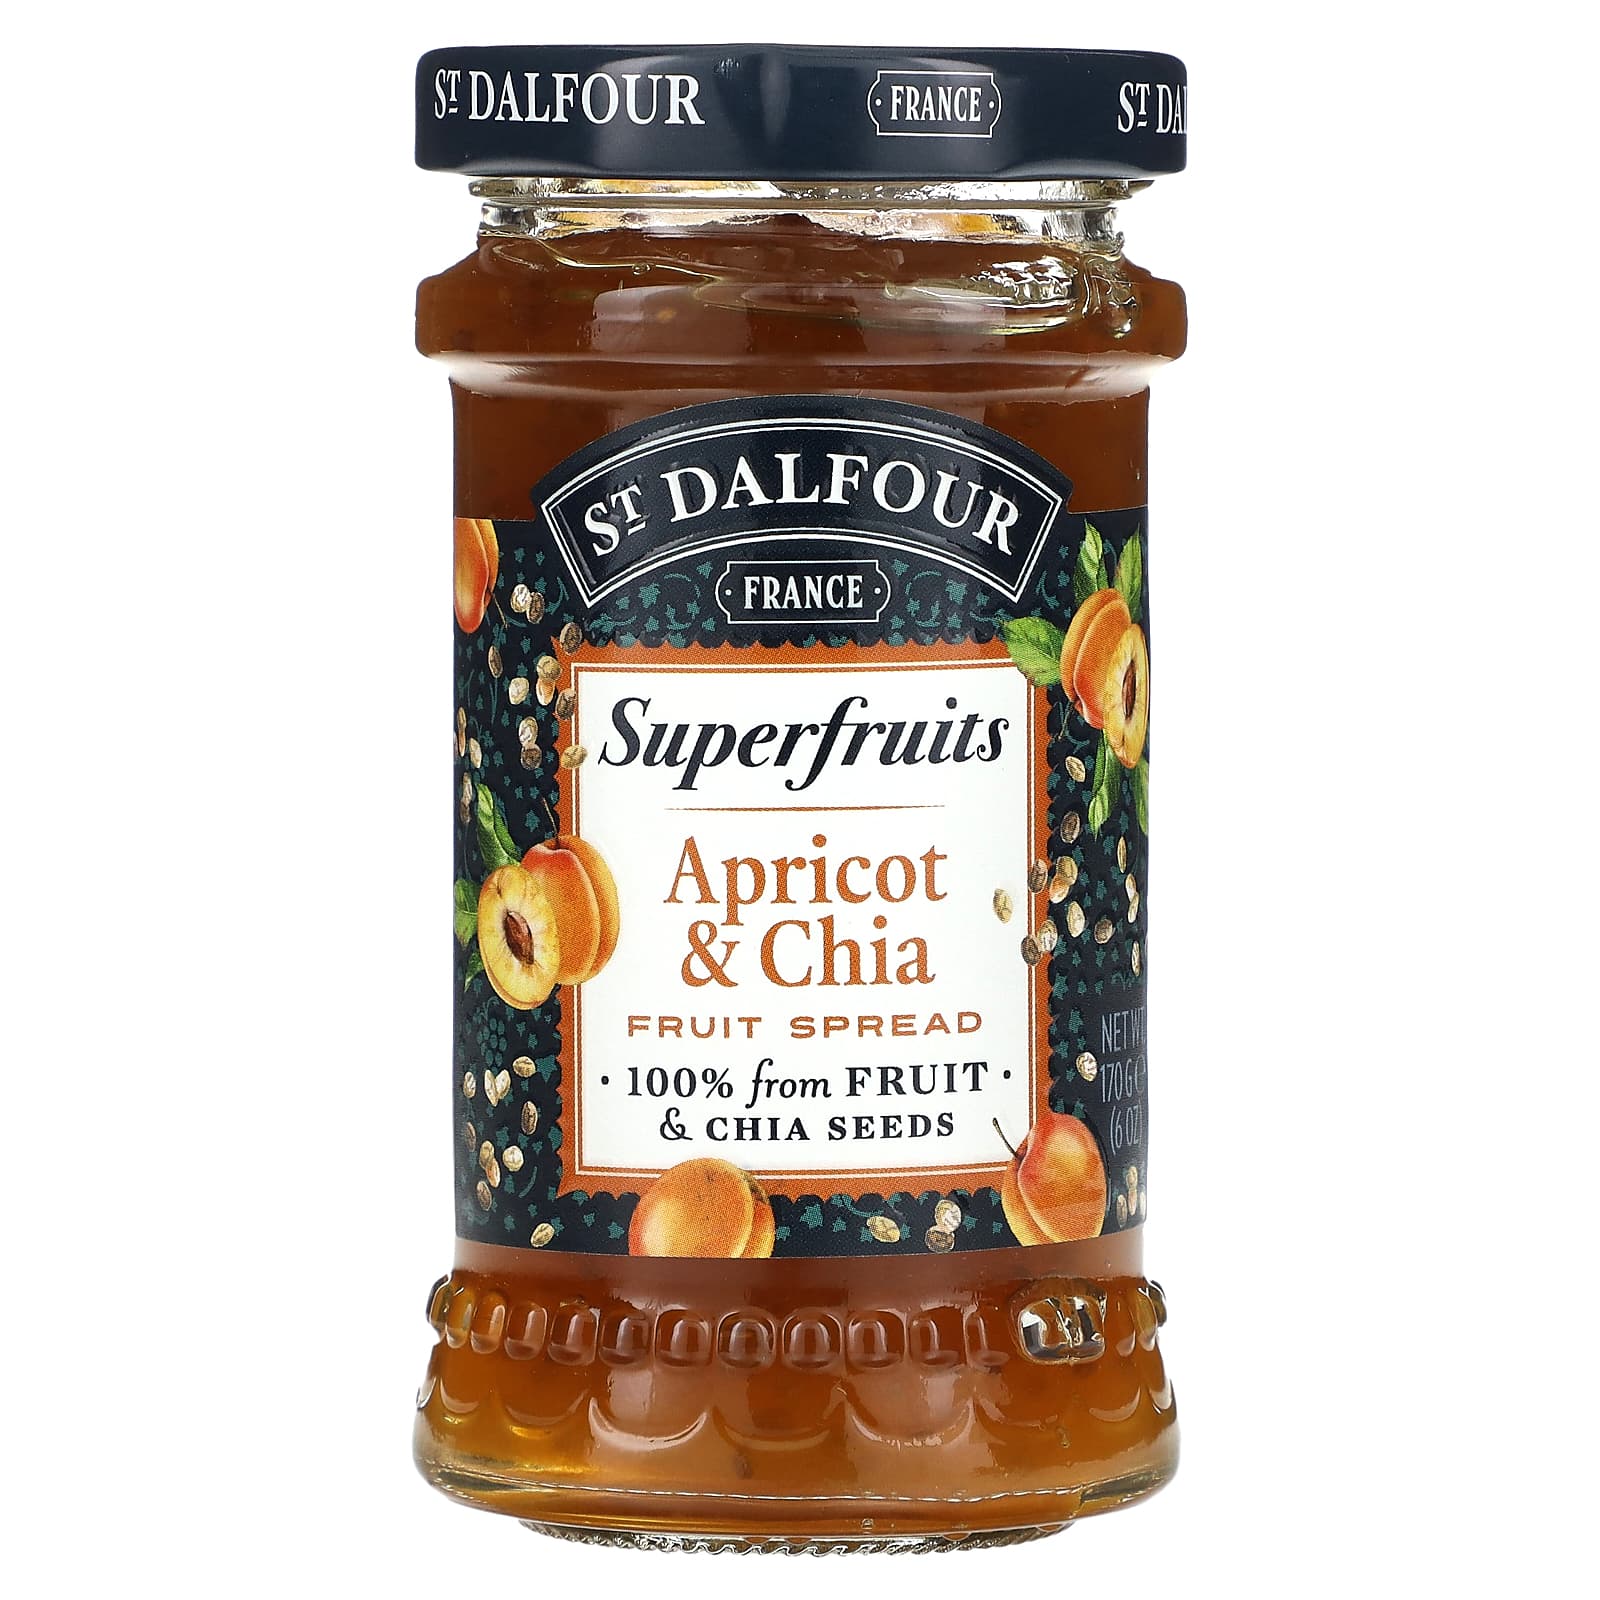 St. Dalfour-Superfruits-Fruit Spread-Apricot & Chia -6 oz (170 g)